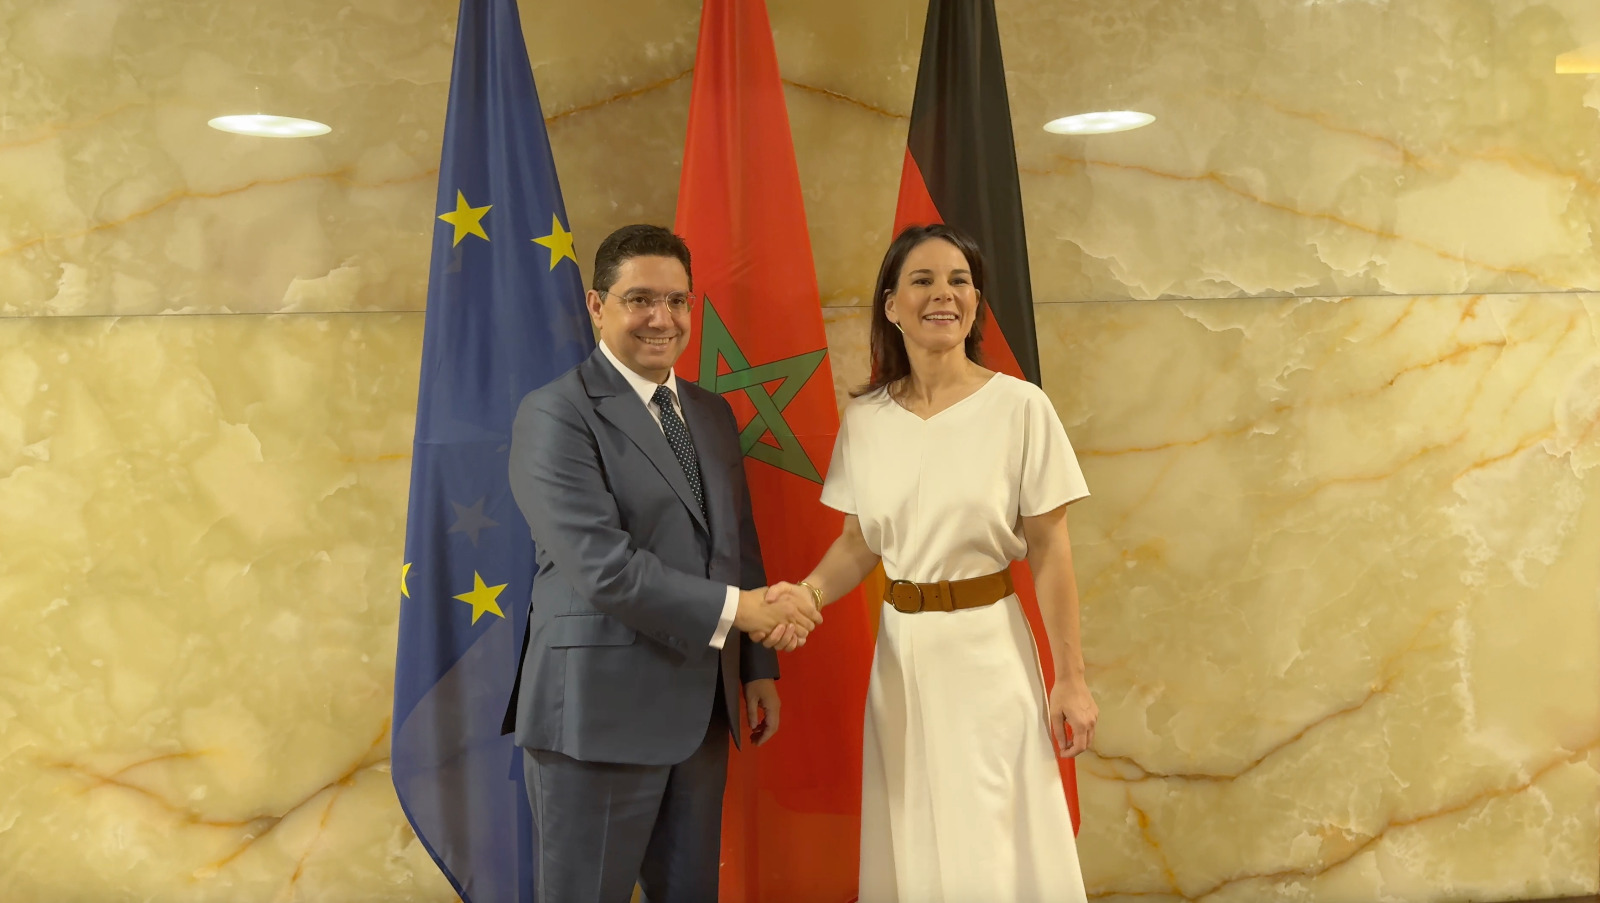 Germany deems Moroccan Autonomy Plan for Sahara as good basis for definitive solution